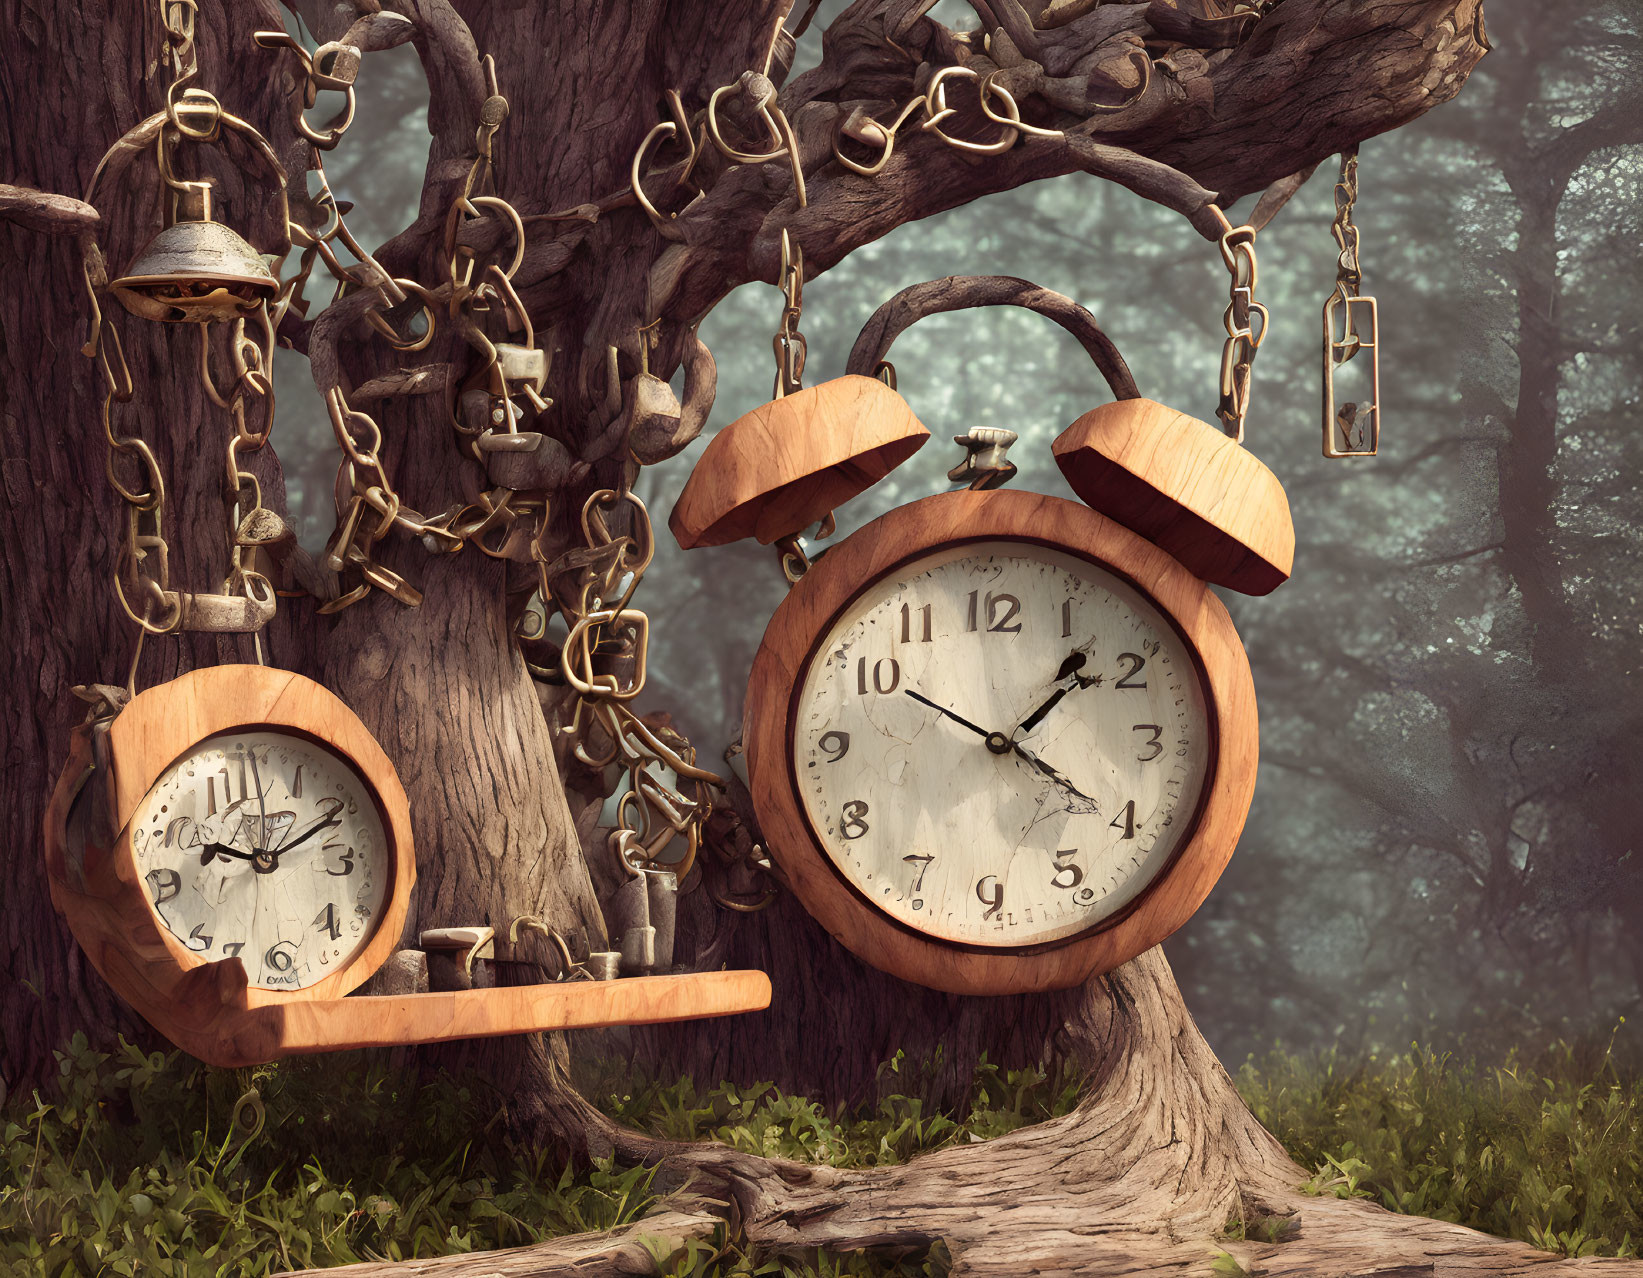 Vintage wooden alarm clock with broken hands on chain in mystical forest scene